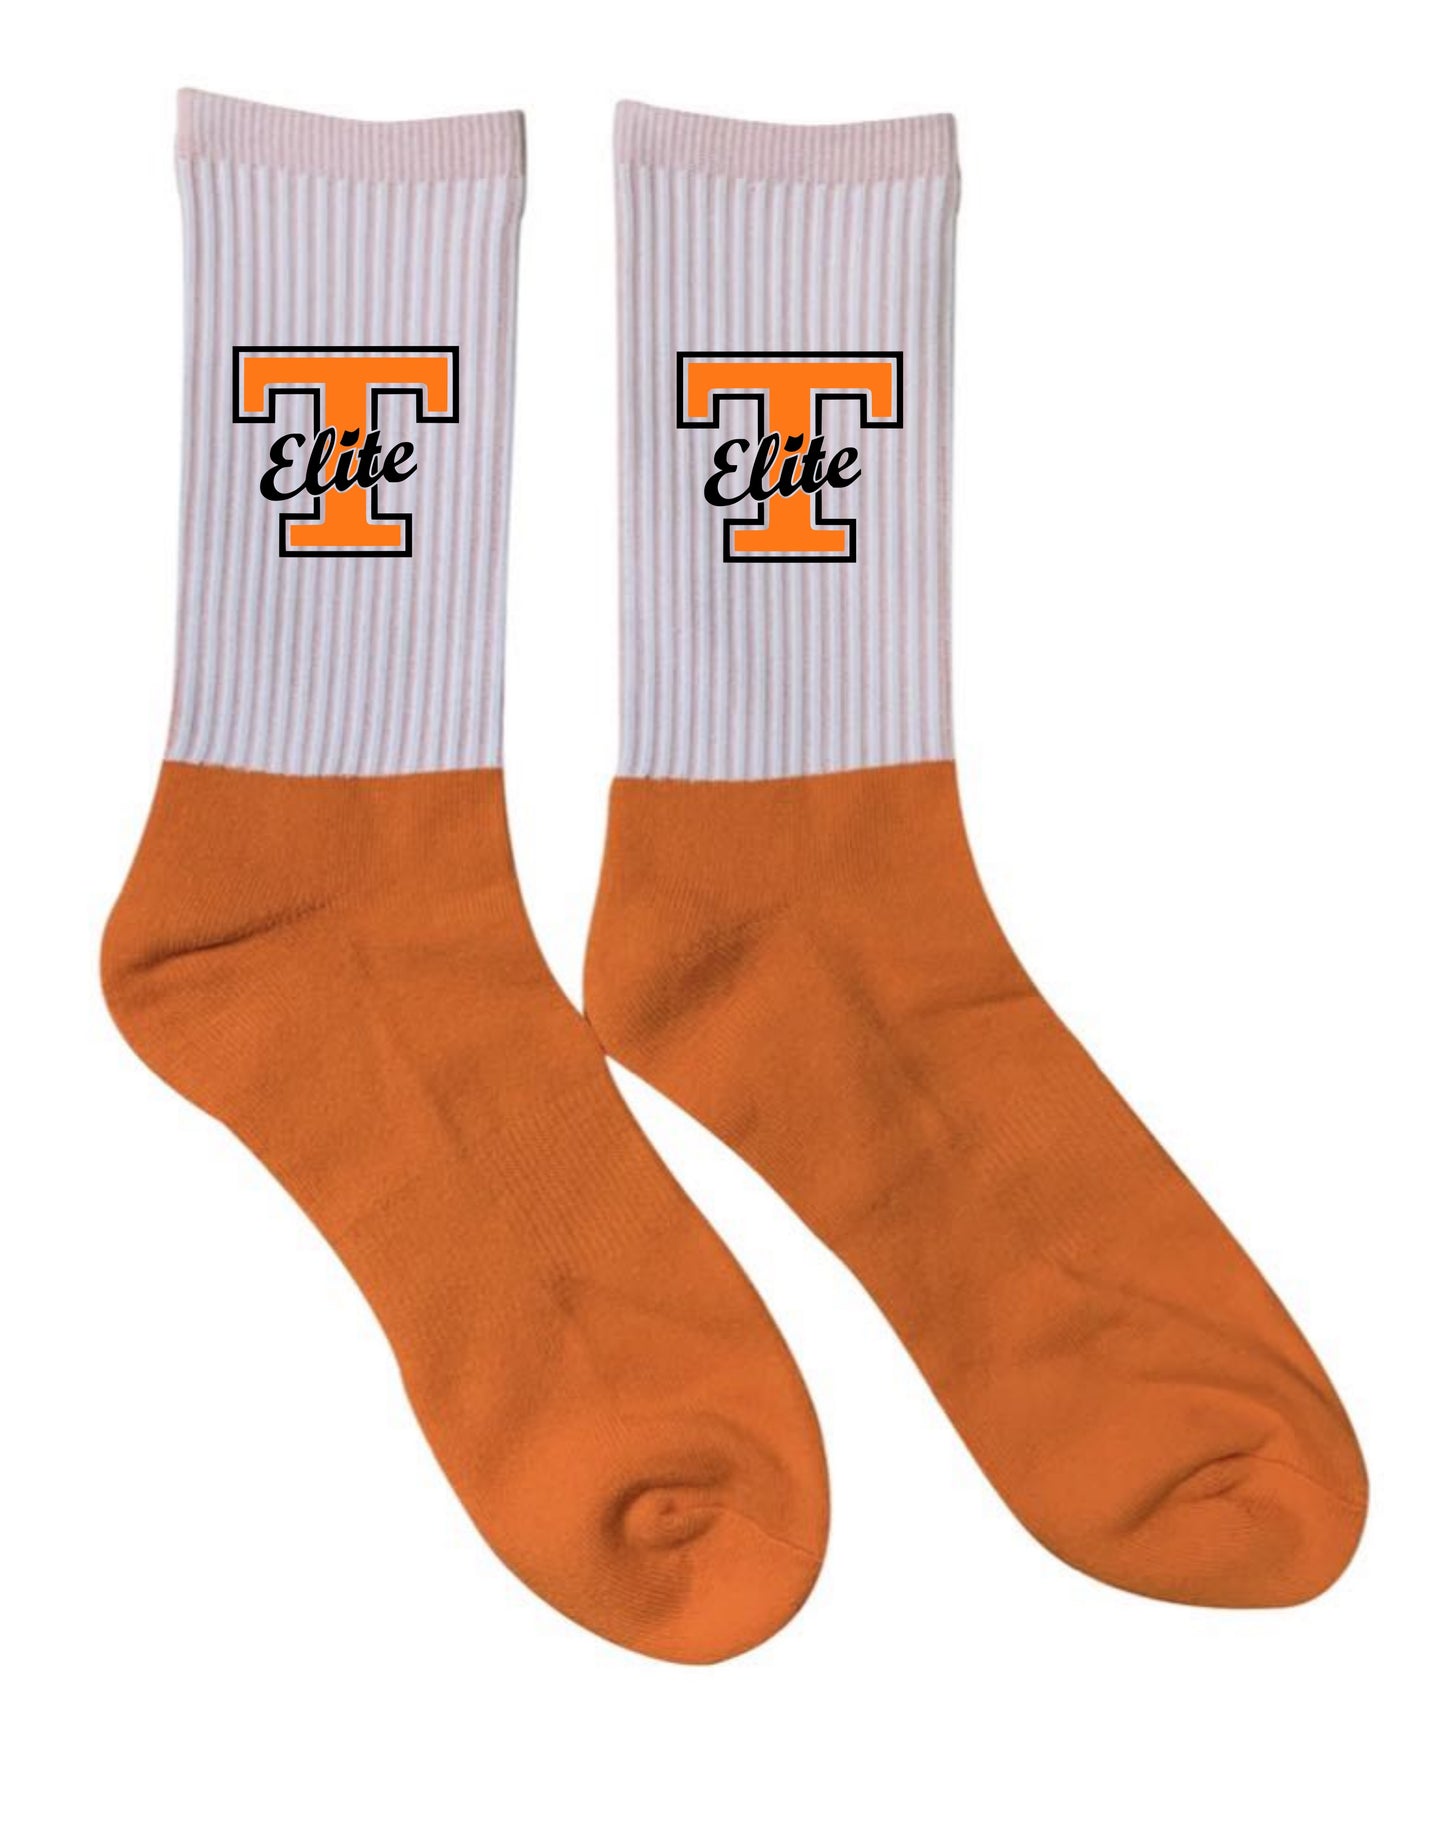 T Elite Logo Athletic Socks